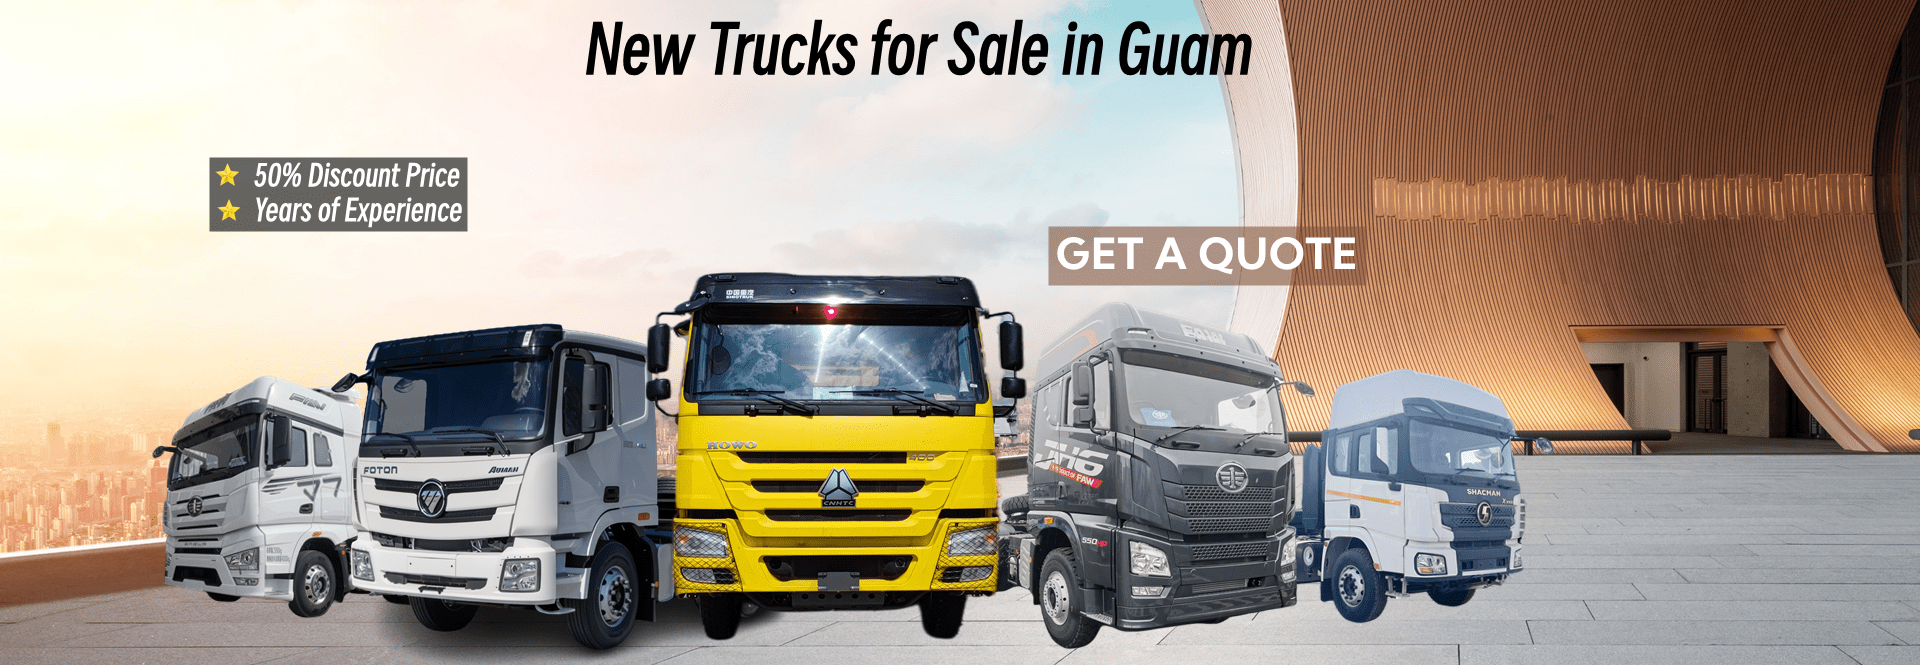 Guam Trucks for Sale